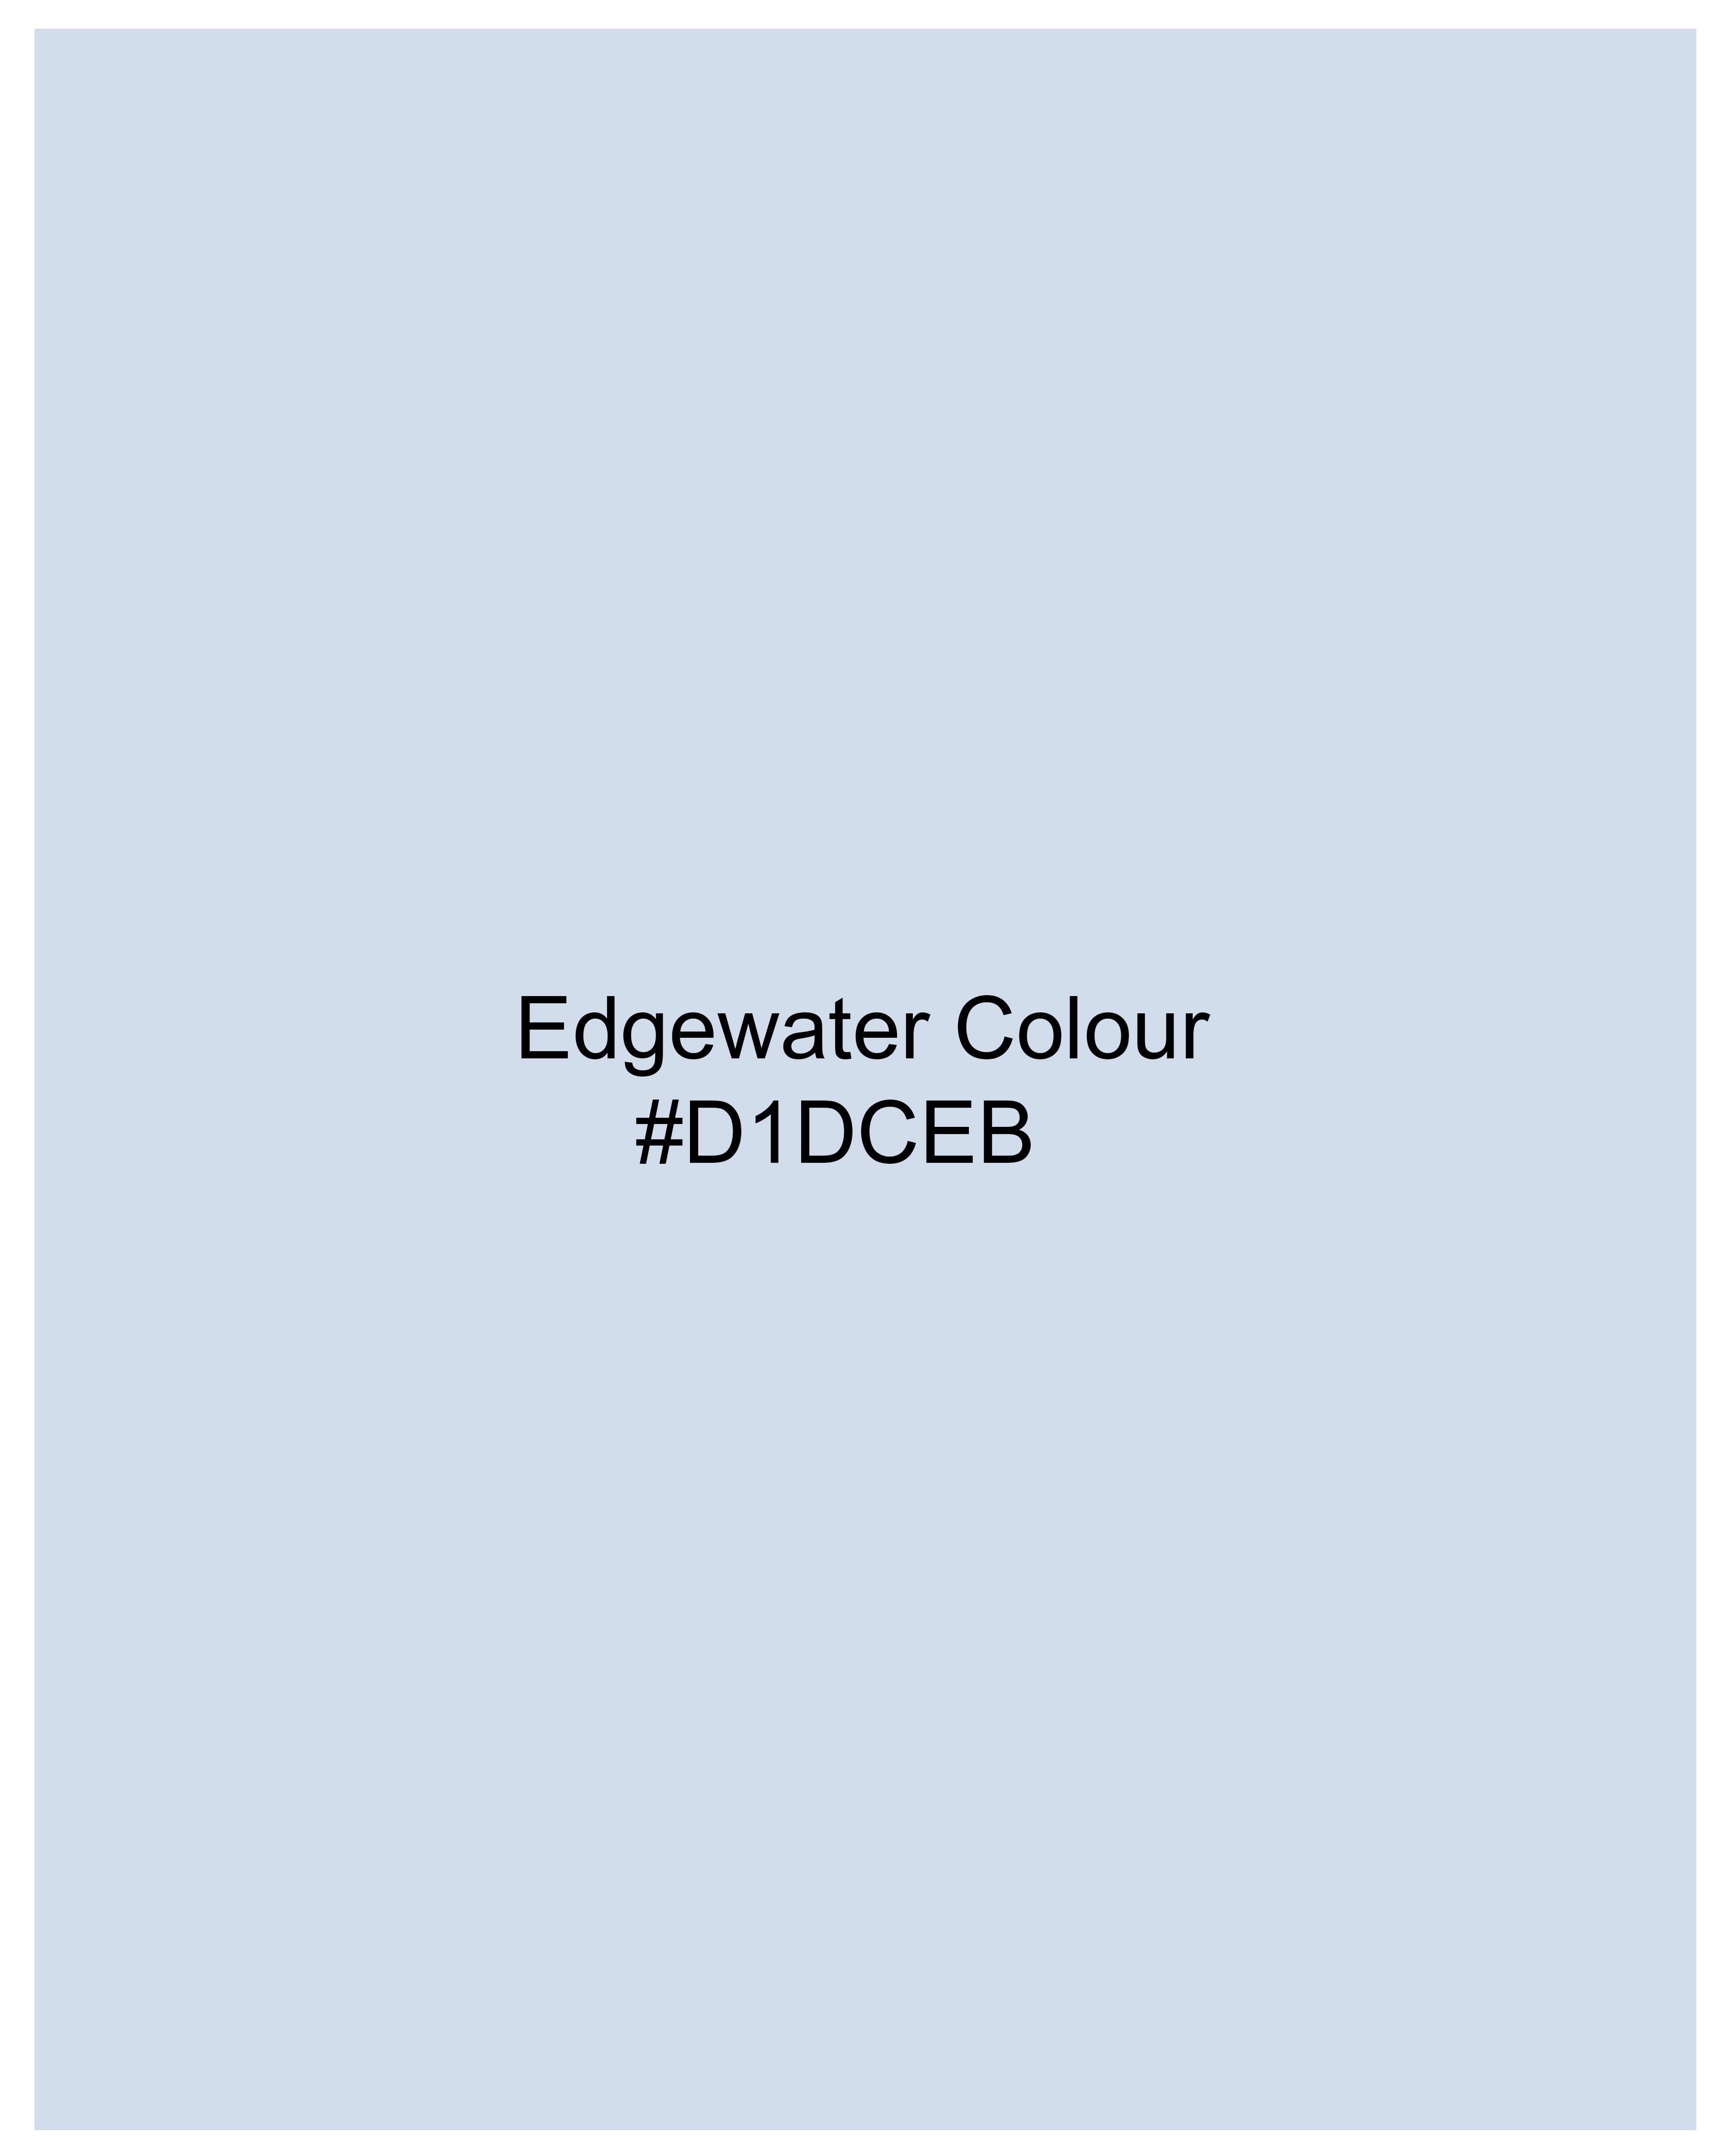 Edgewater Sky Blue Royal Oxford Shirt 9716-38, 9716-H-38, 9716-39, 9716-H-39, 9716-40, 9716-H-40, 9716-42, 9716-H-42, 9716-44, 9716-H-44, 9716-46, 9716-H-46, 9716-48, 9716-H-48, 9716-50, 9716-H-50, 9716-52, 9716-H-52